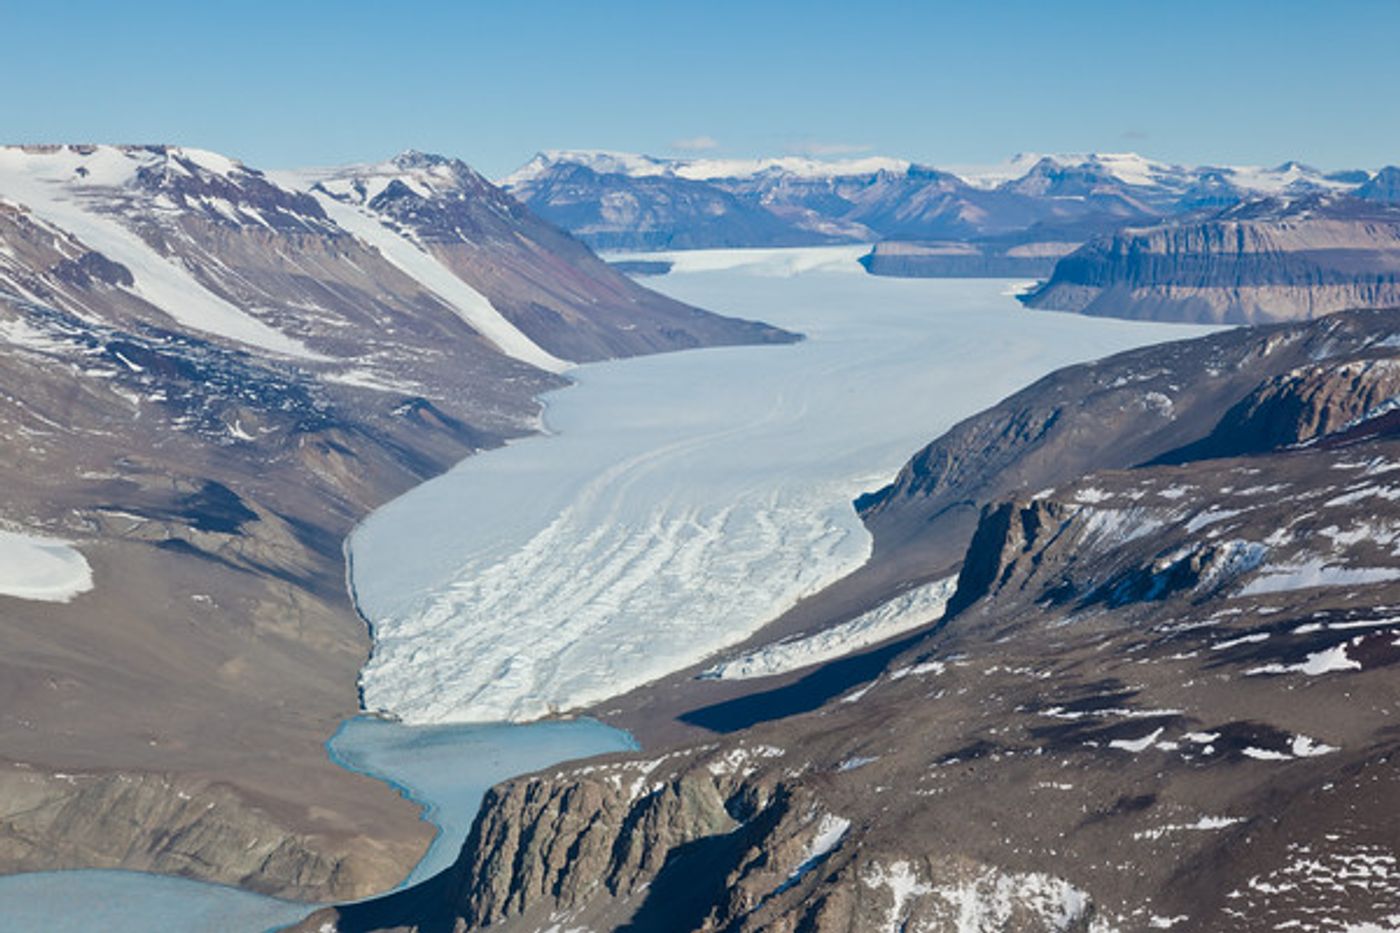 Taylor Glacier in Antarctica. Photo: Landscapes and Scenery